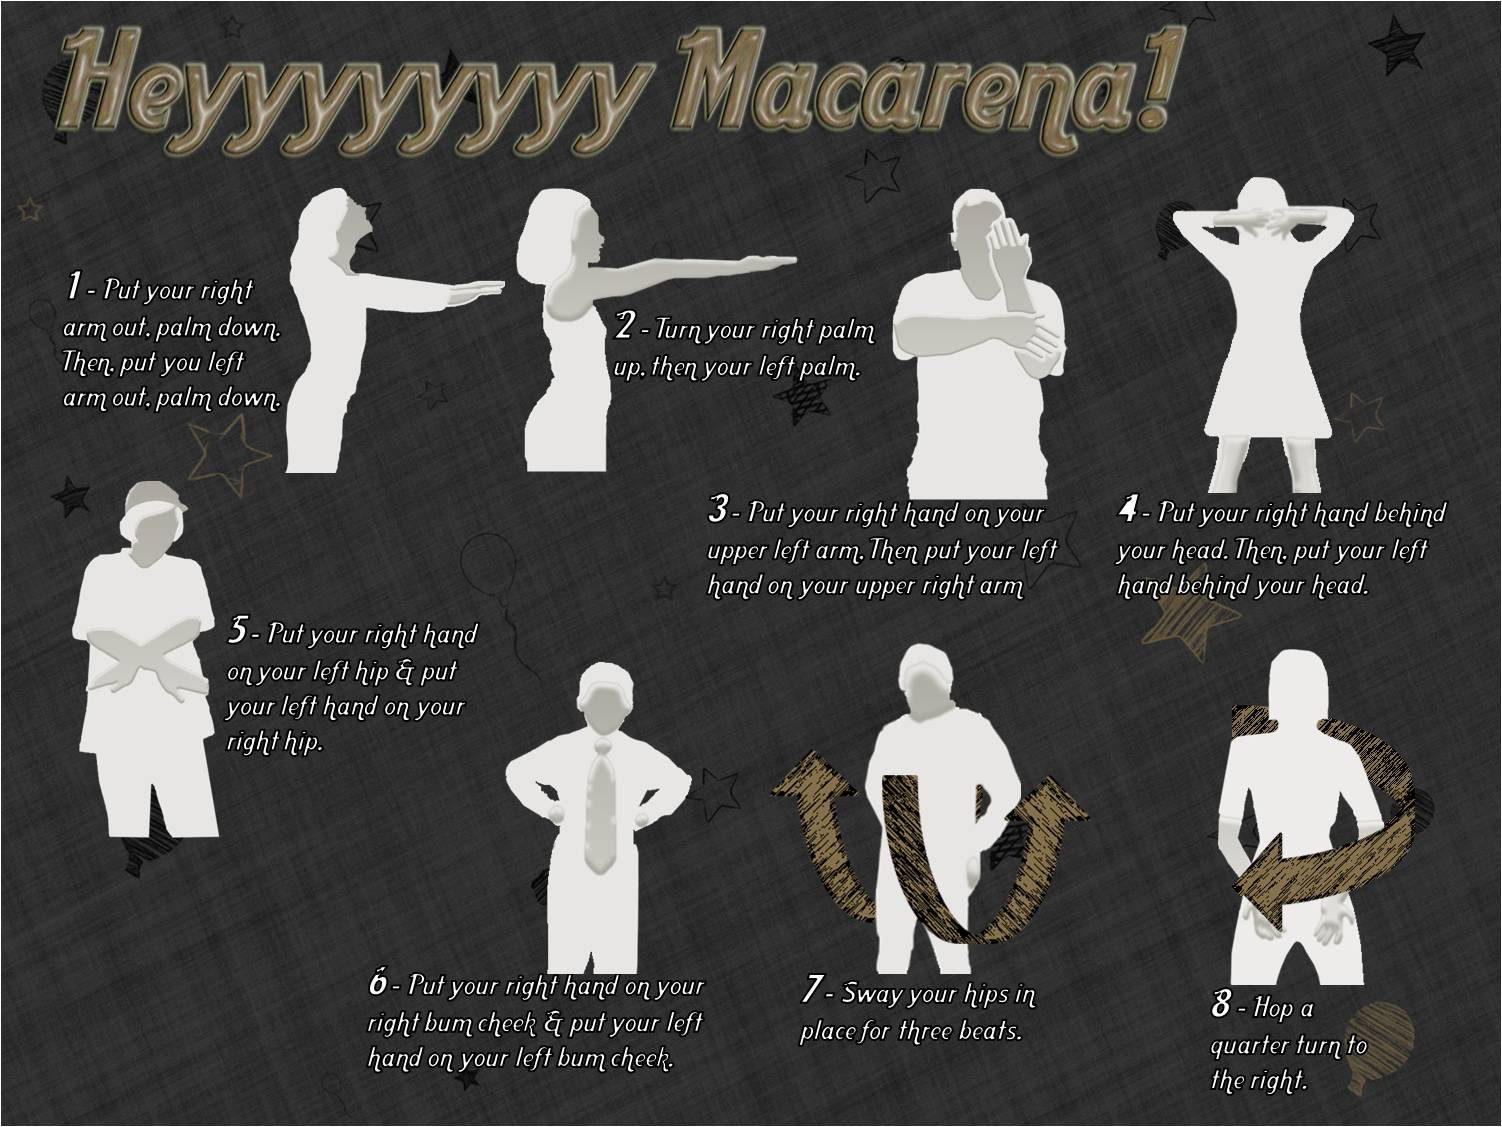 the Macarena